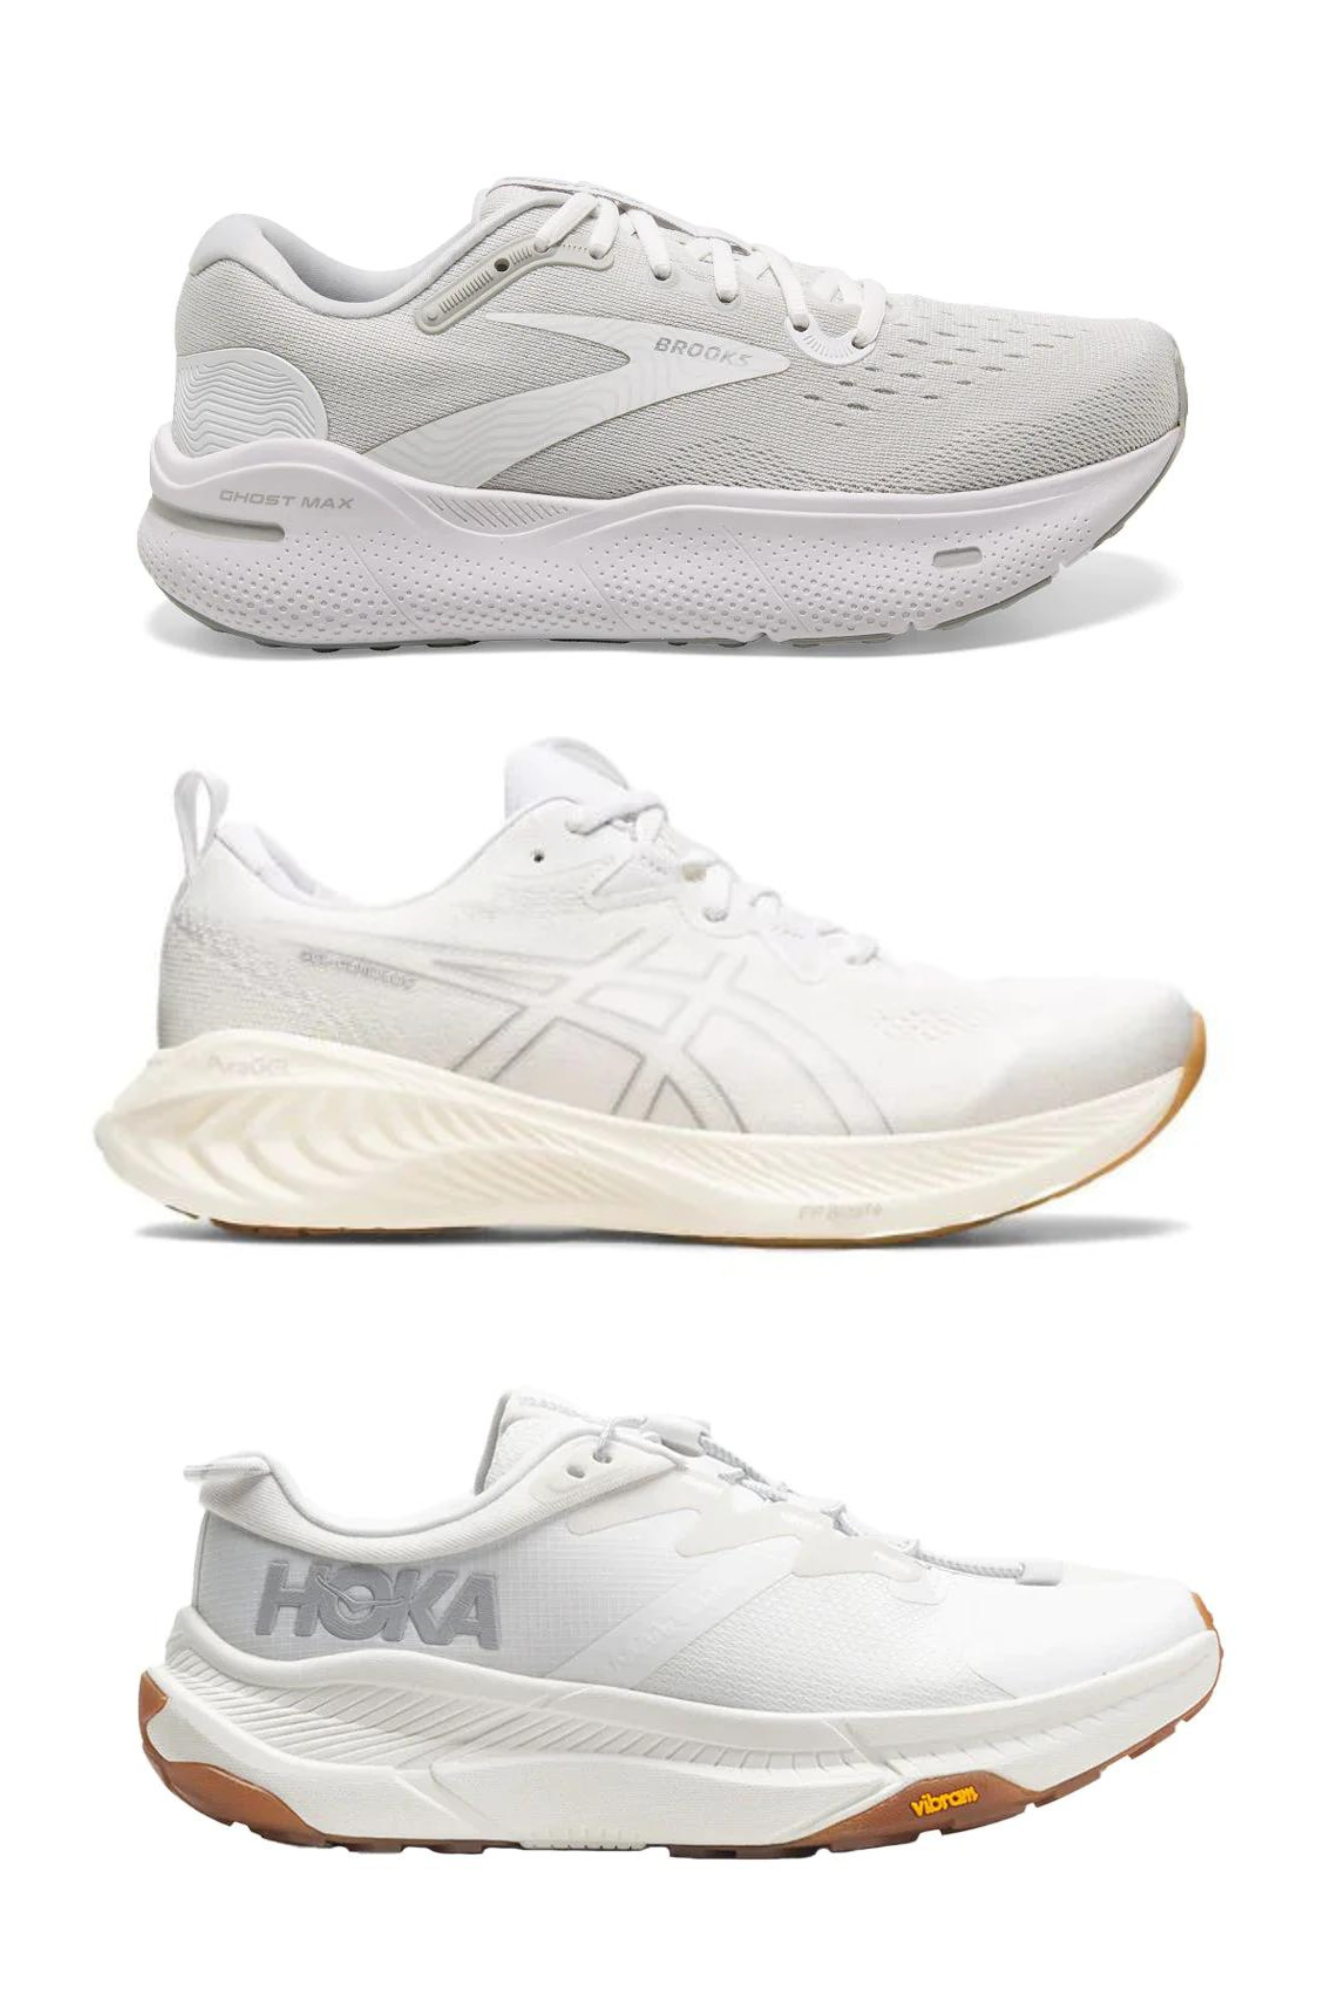 All-White Running Shoe Options for both Men and Women